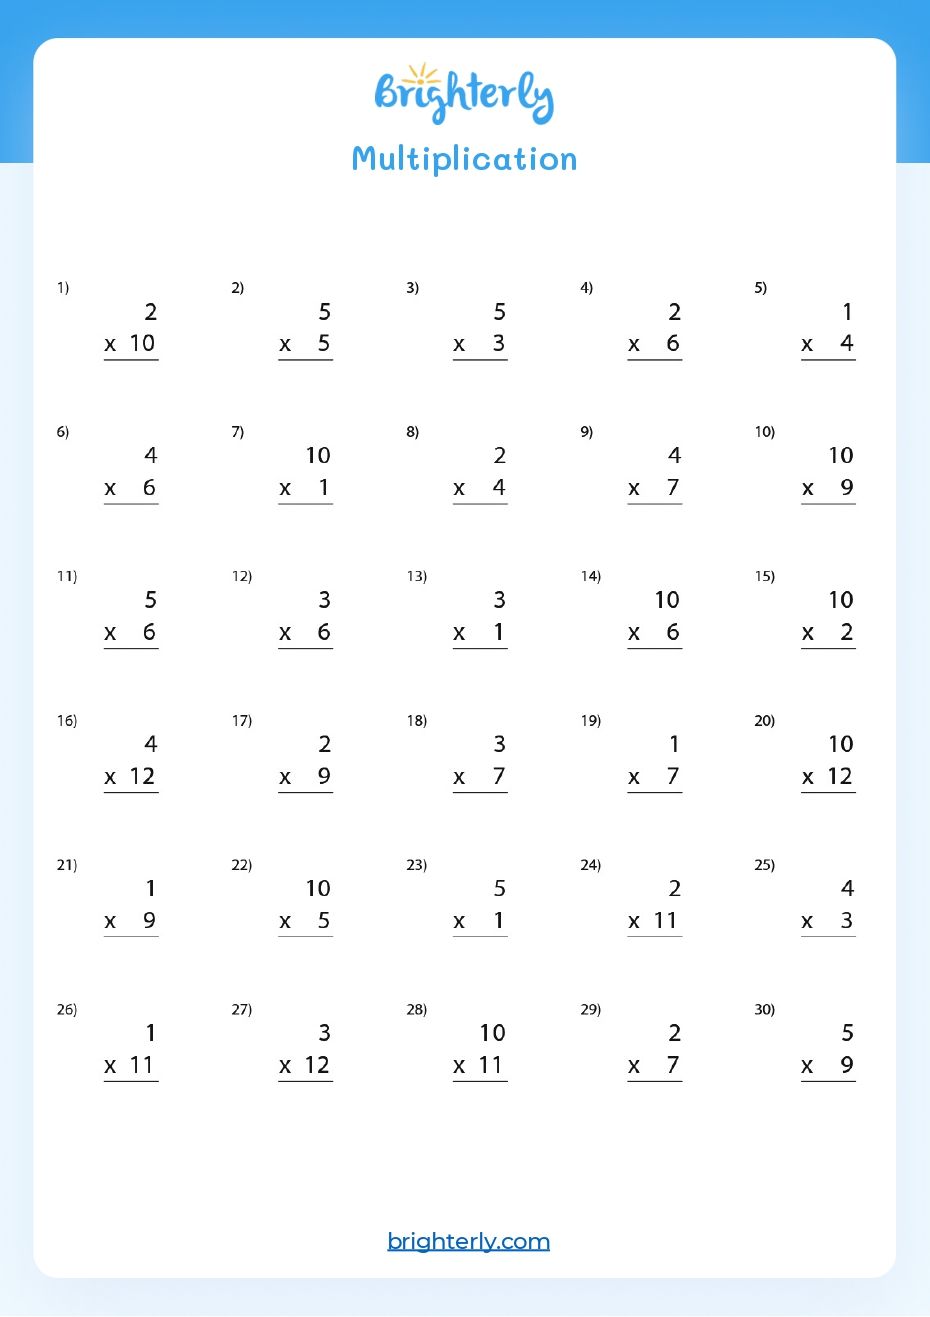 3rd grade multiplication worksheets best coloring pages for kids - 3rd grade multiplication worksheets best coloring pages for kids | free printable 3rd grade multiplication worksheets grade 3